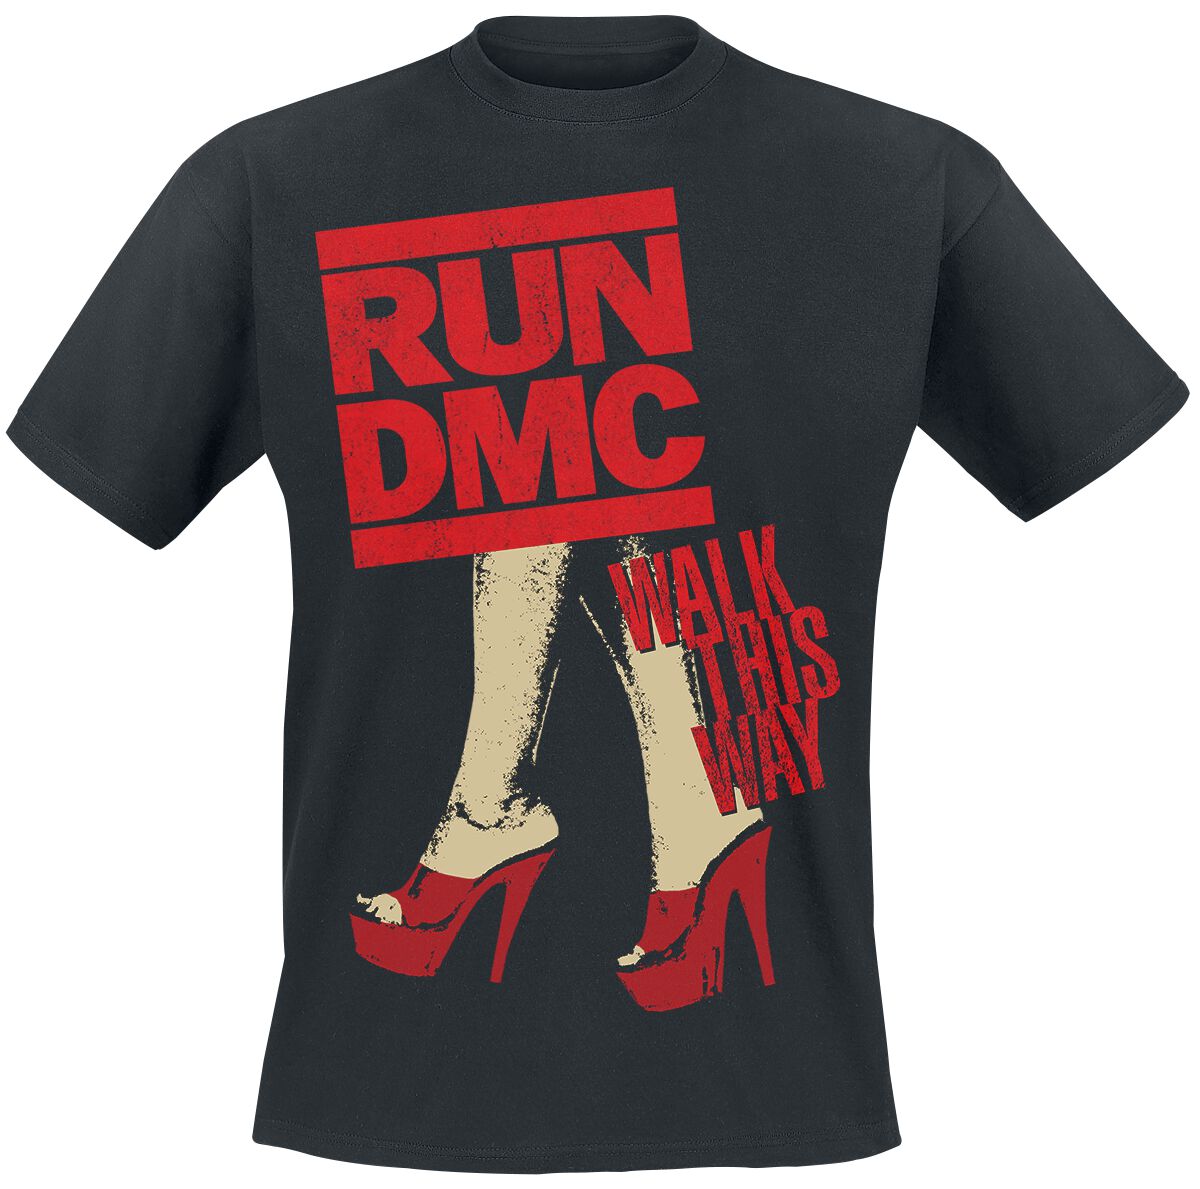 Run DMC Walk This Way Legs T-Shirt schwarz in L